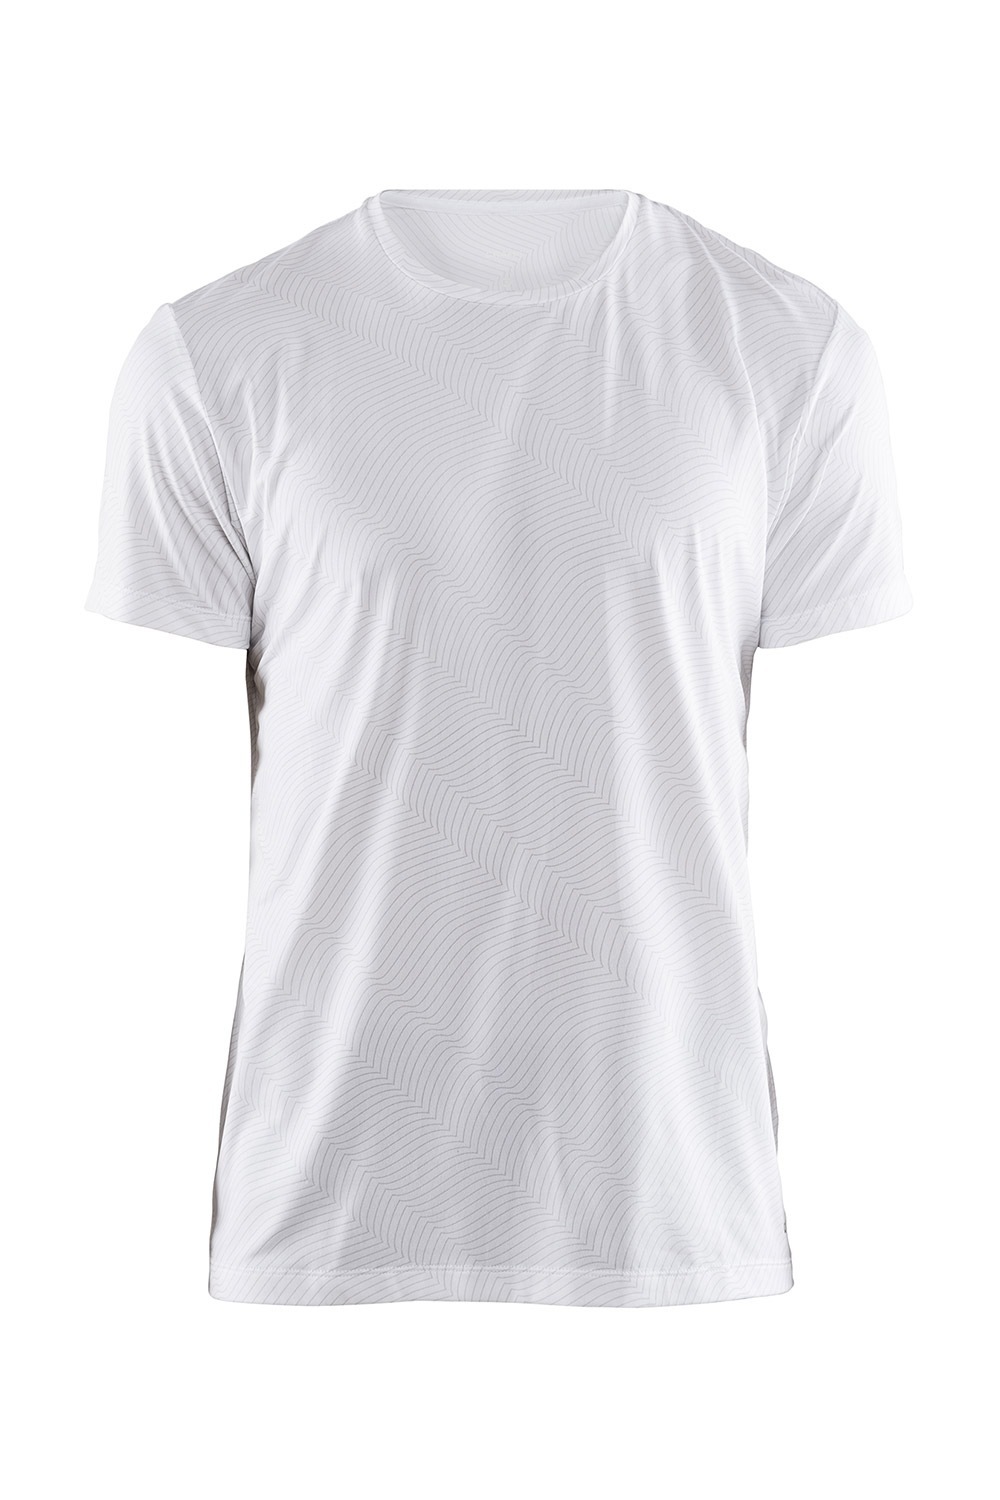 CRAFT Essential férfi póló fehér mintás fotója